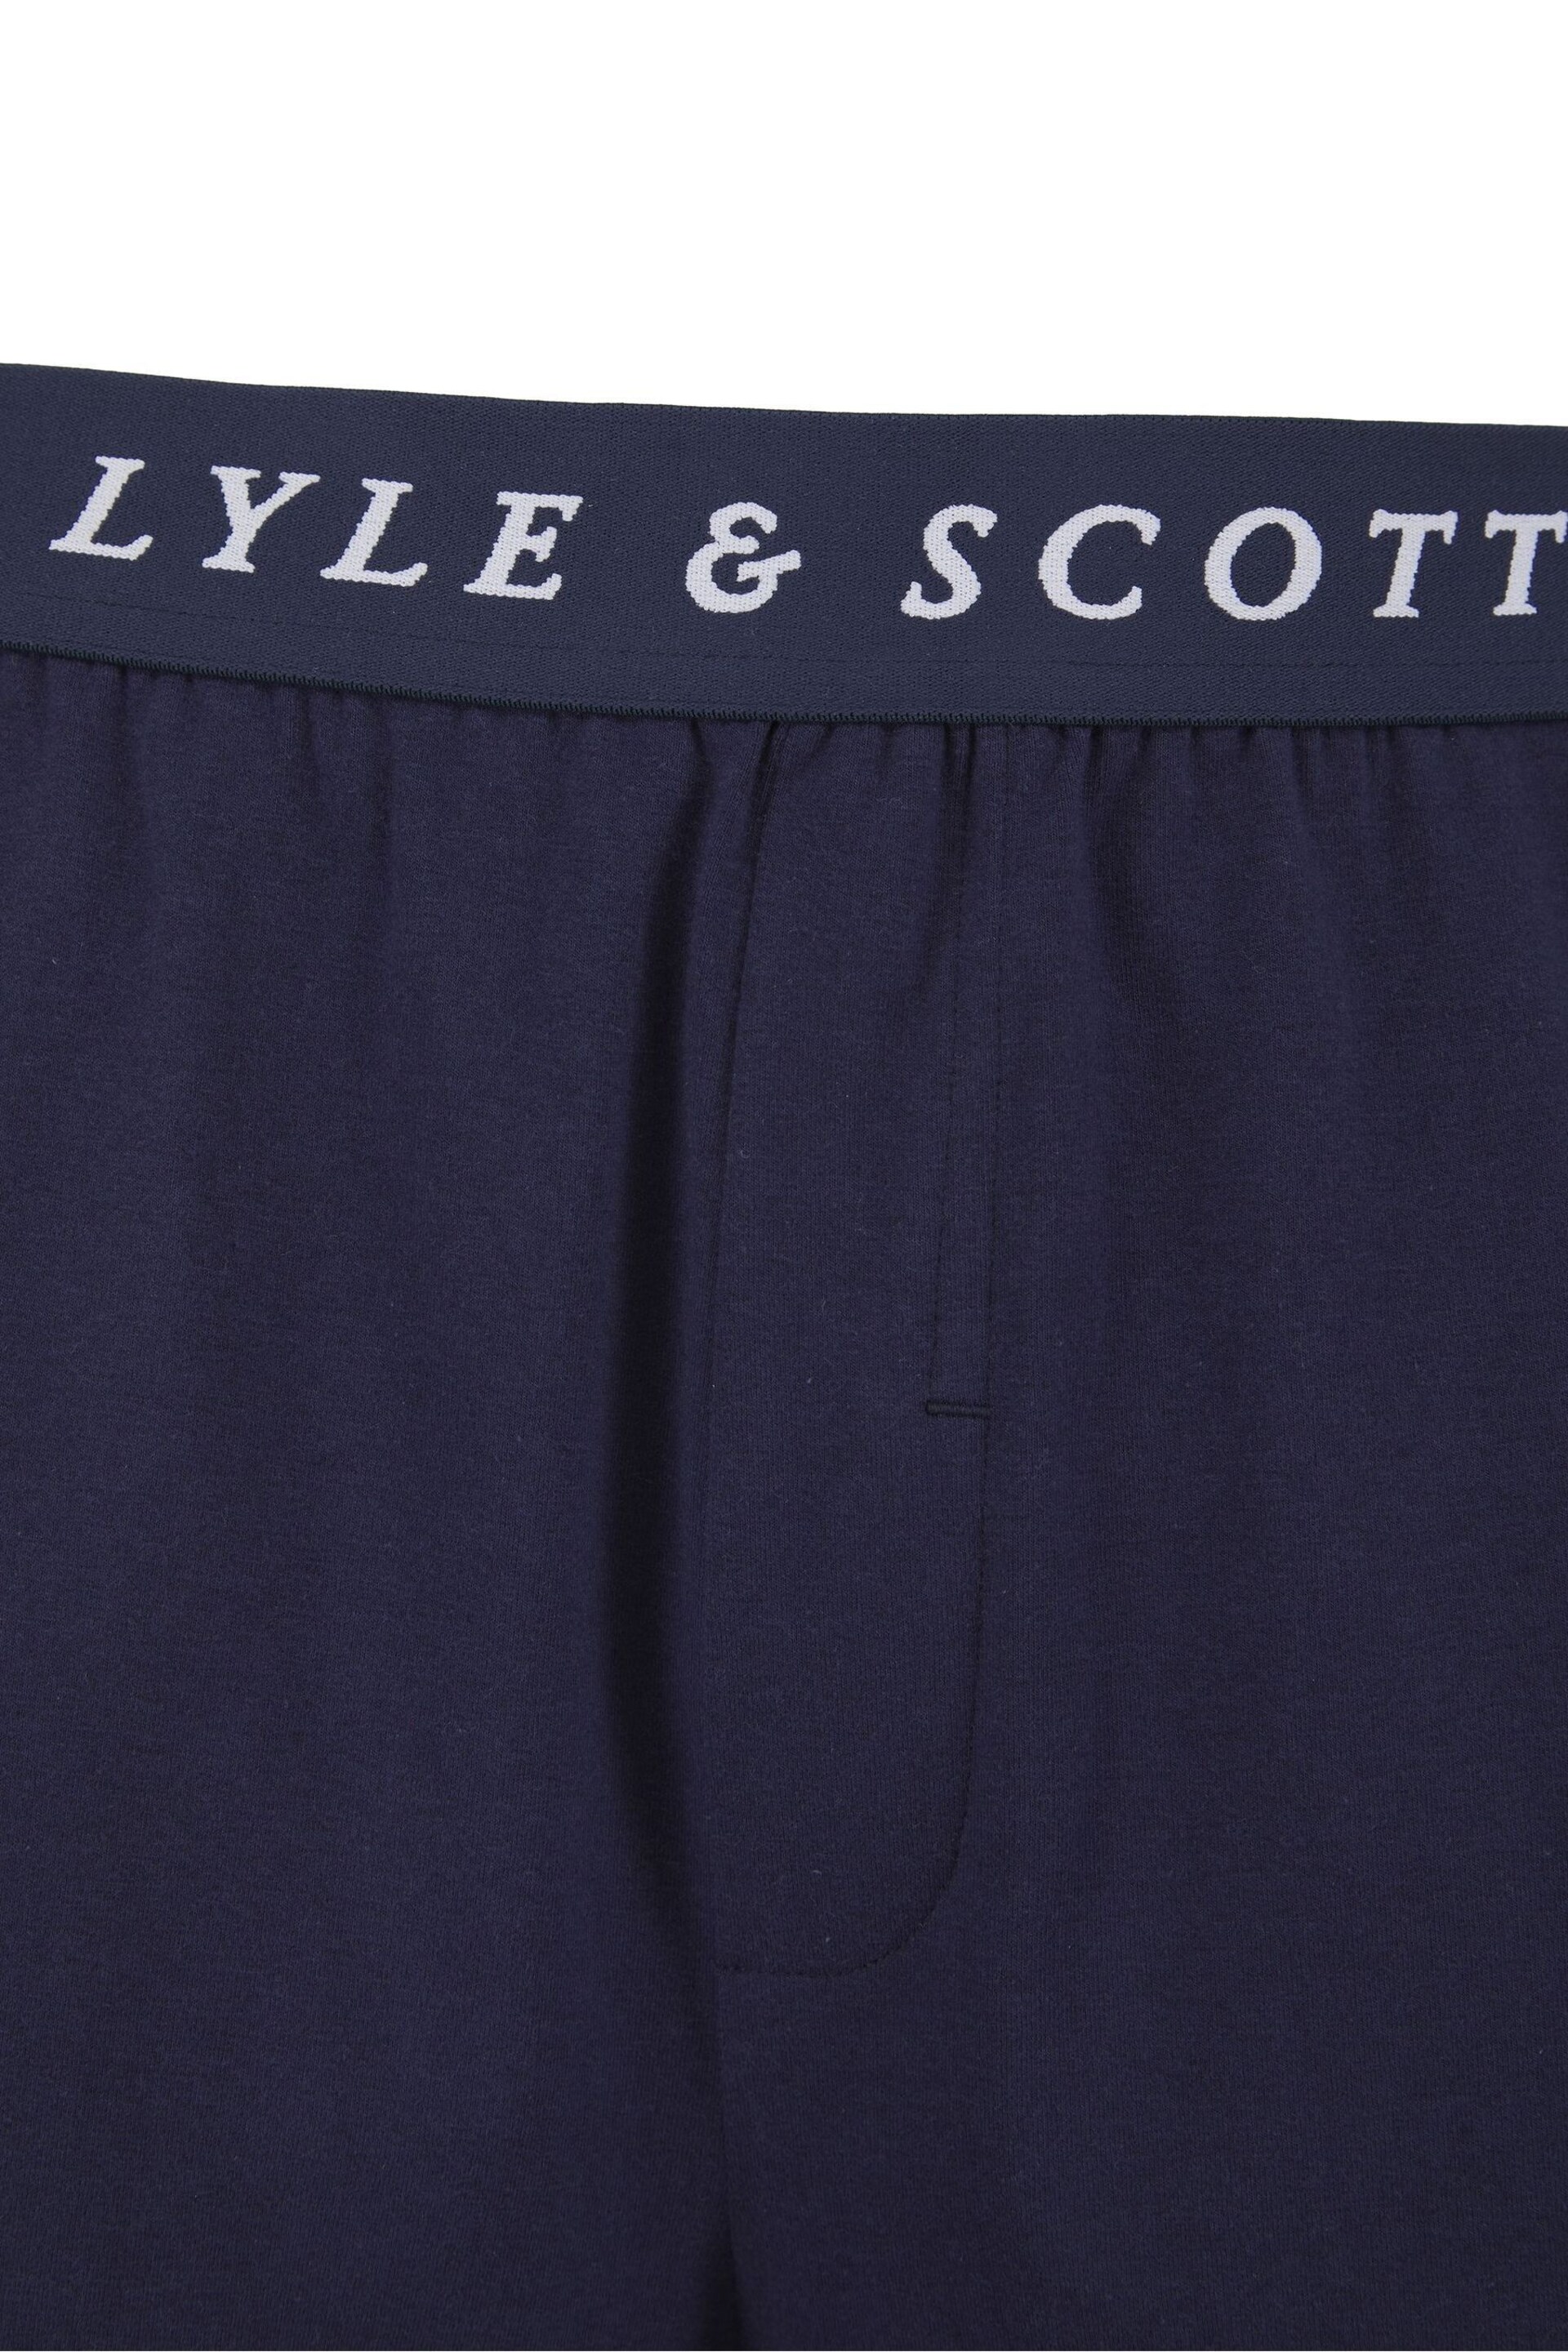 Lyle & Scott Blue Oakley T-Shirt and Short Set - Image 6 of 6